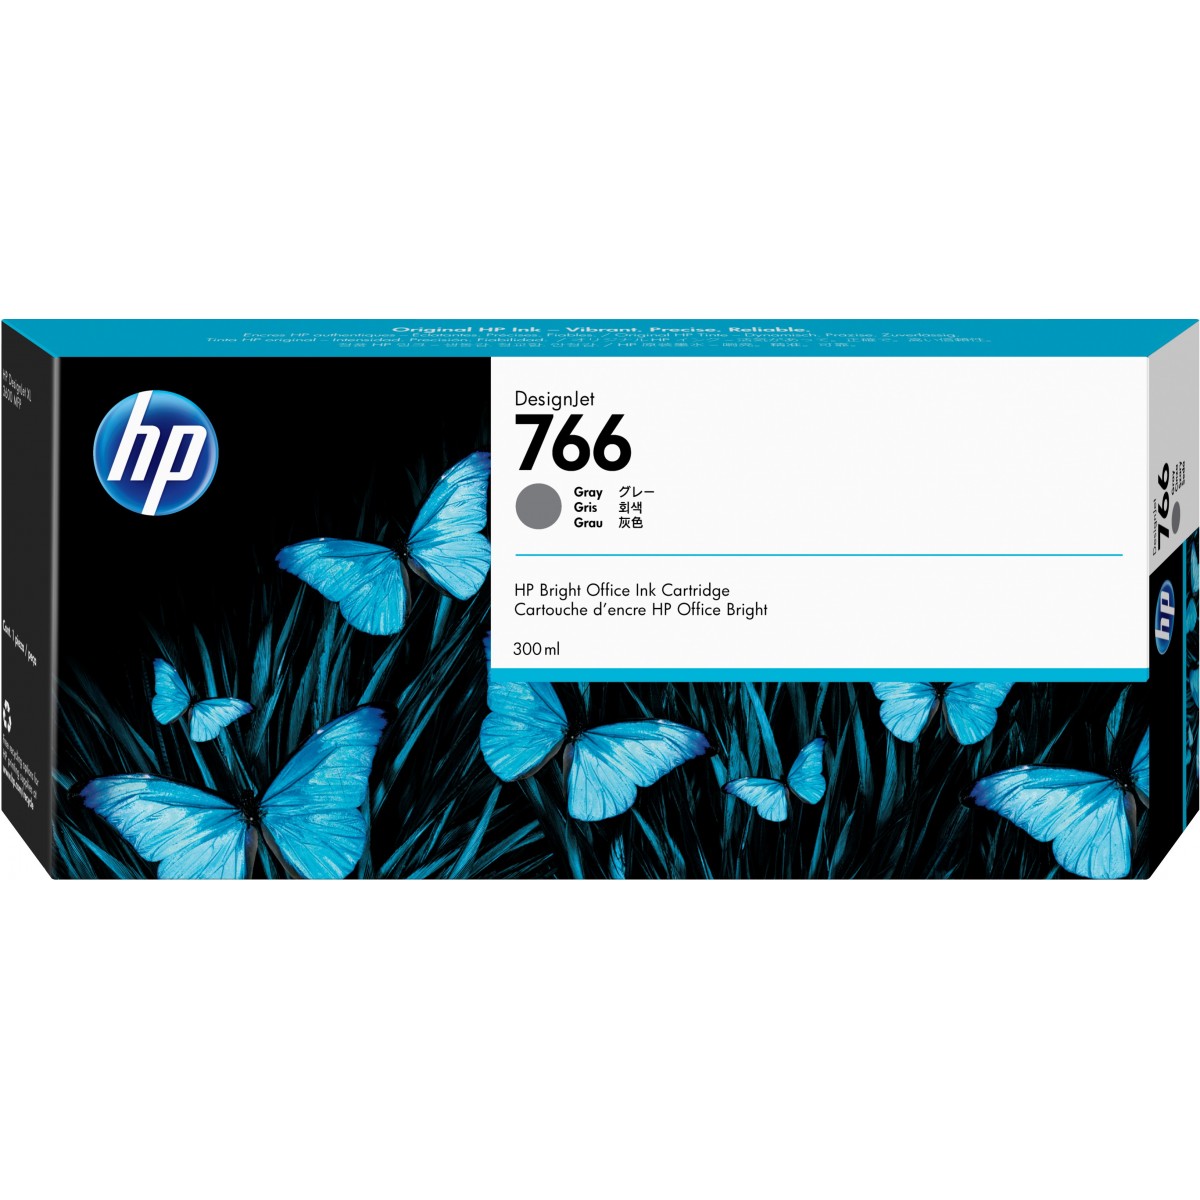 HP 766 - Original - Dye-based ink - Grey - HP - HP DesignJet XL 3600 - 1 pc(s)